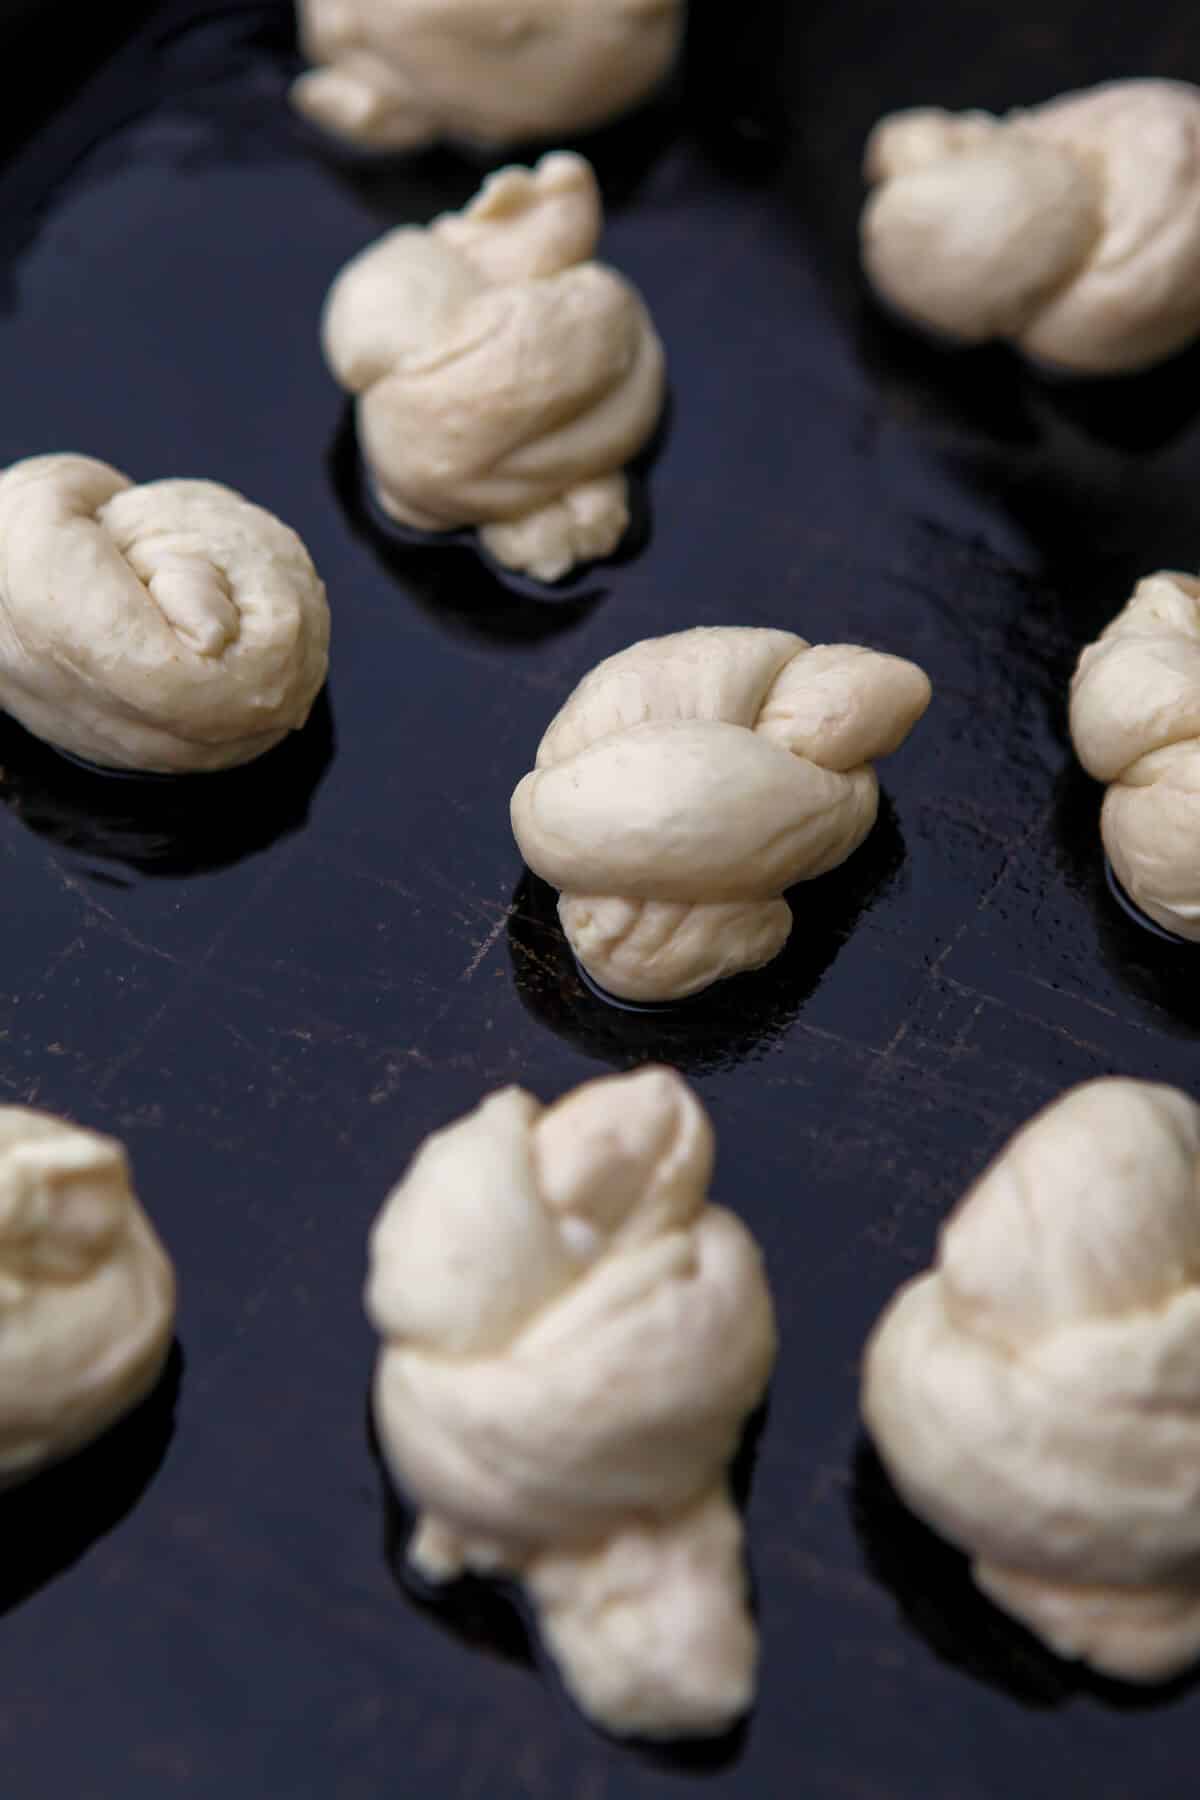 Dough knots on a baking sheet before baking.